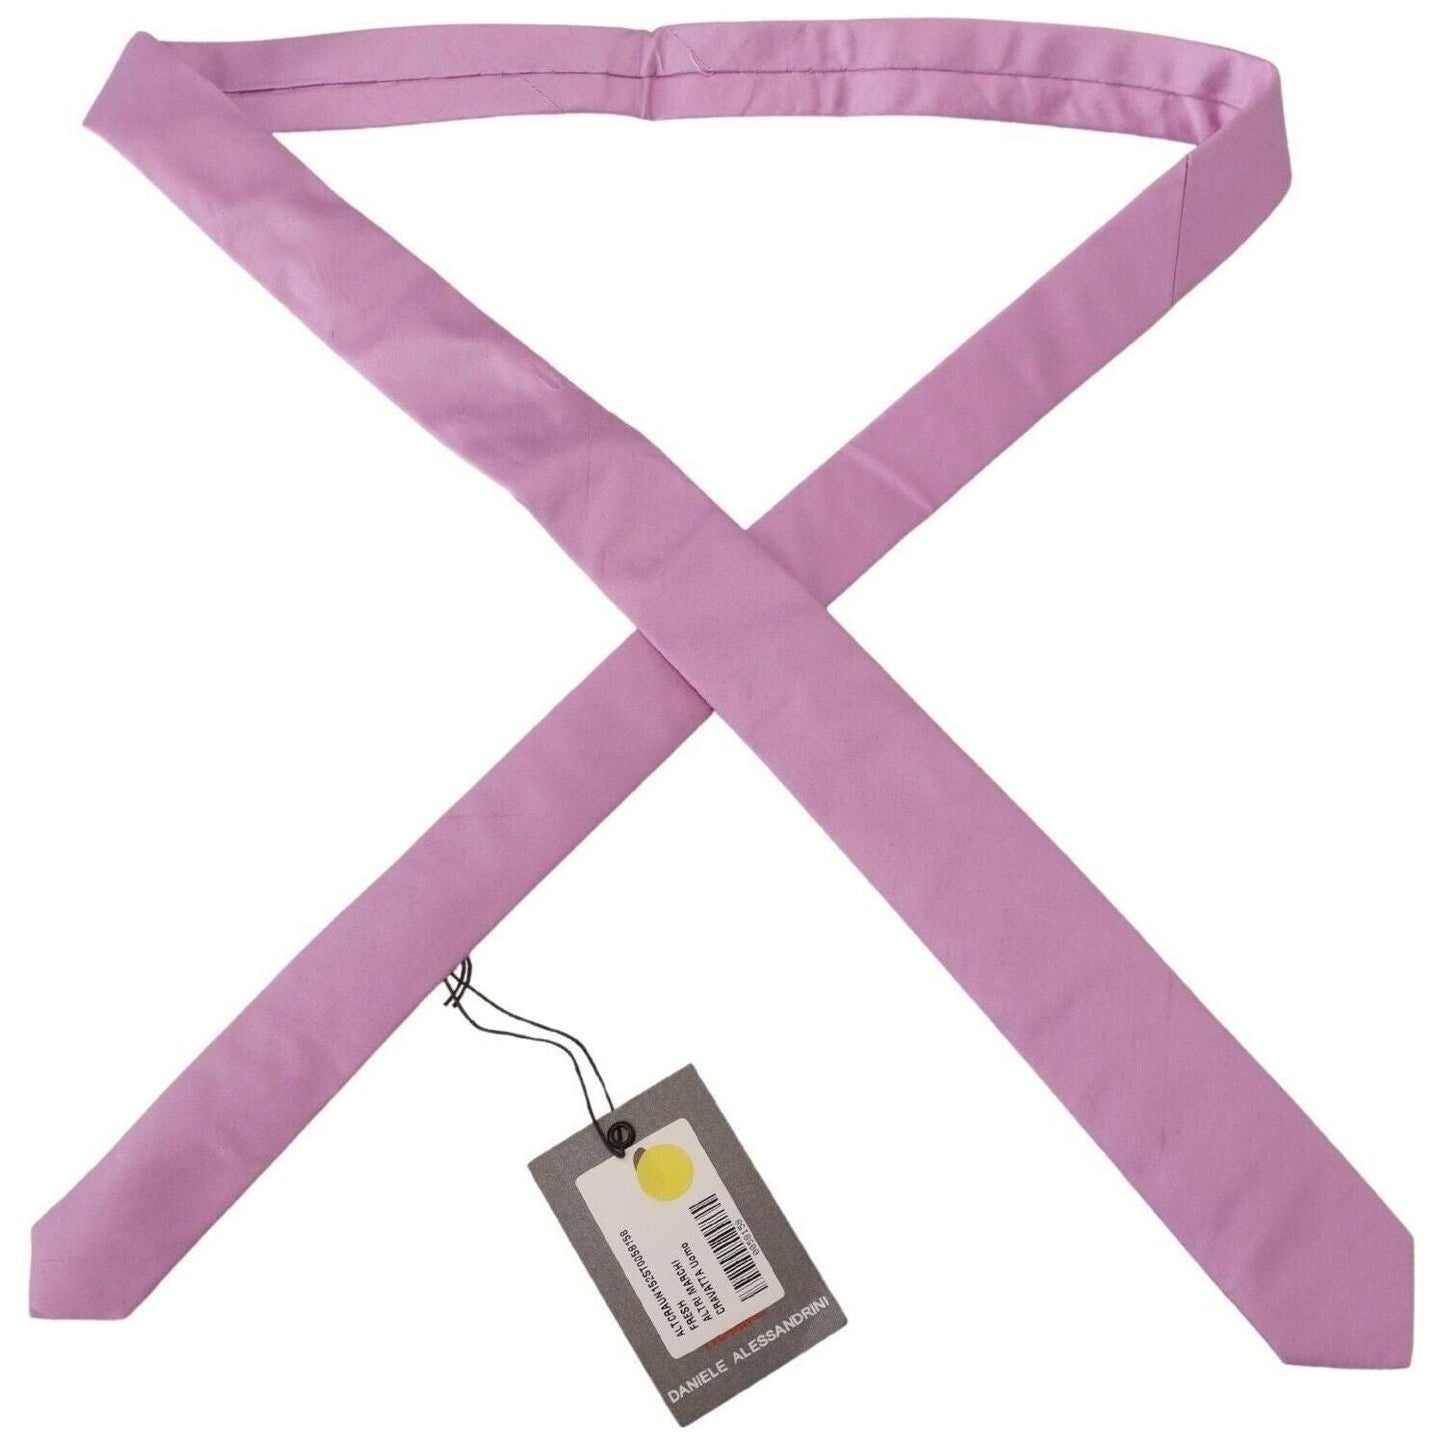 Daniele Alessandrini Elegant Silk Men's Tie in Pink pink-classic-men-necktie-accessory-silk-tie